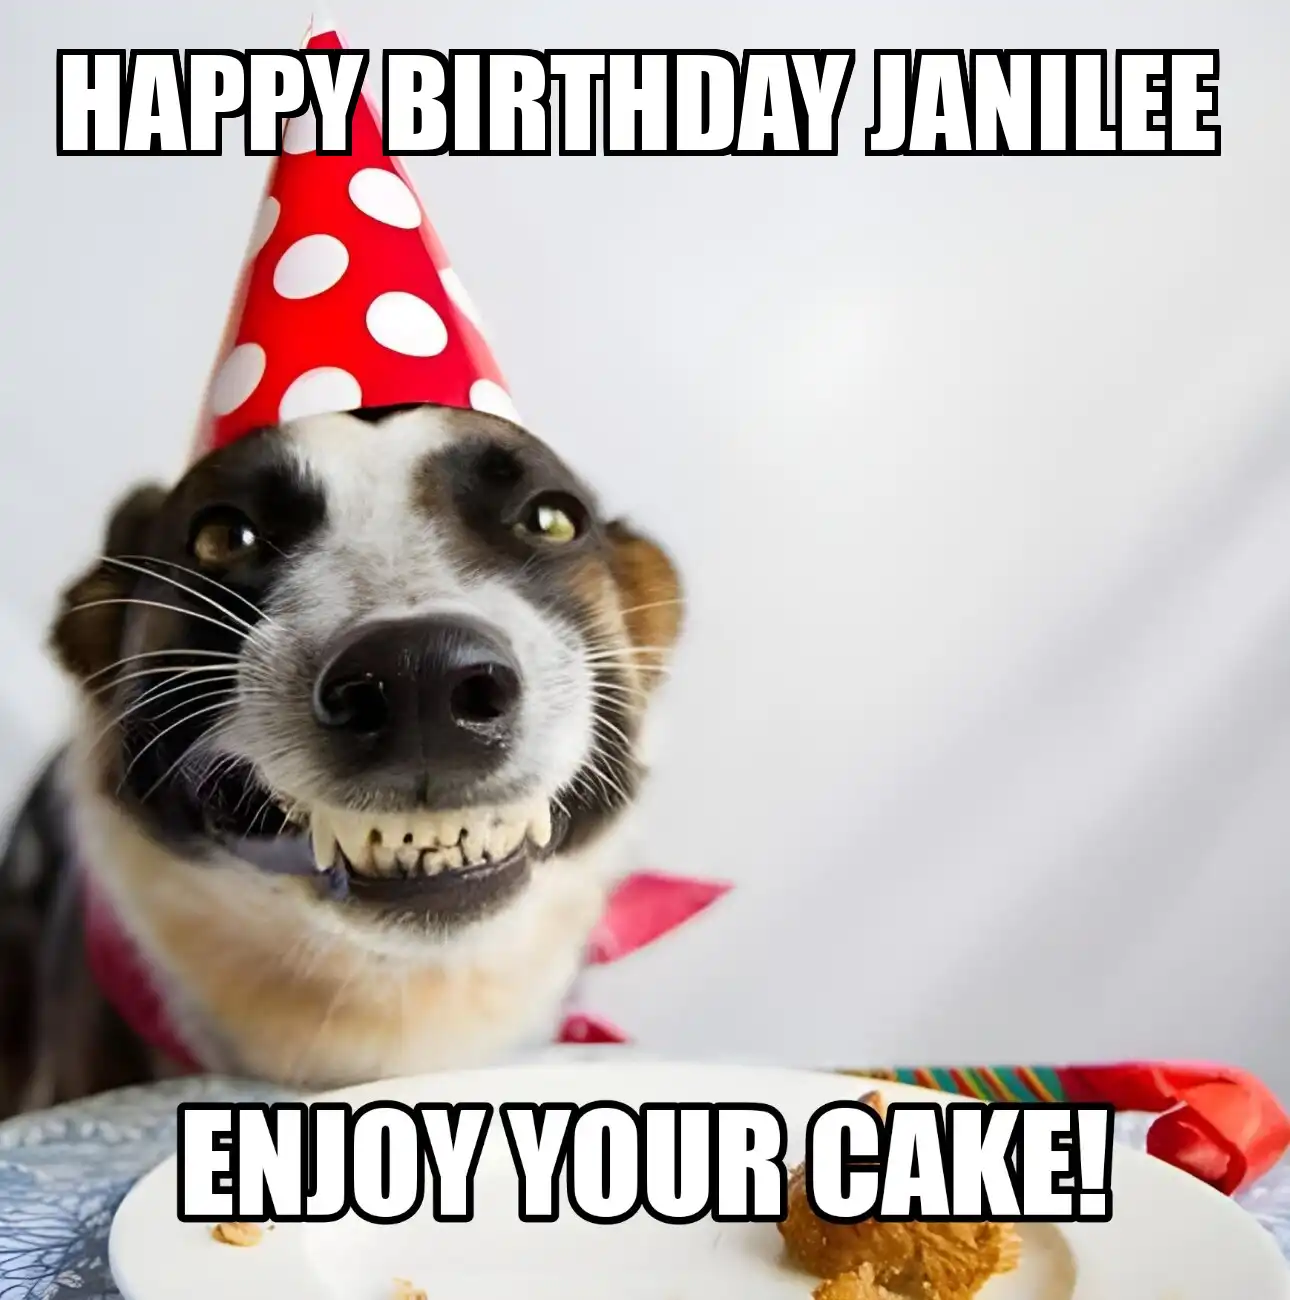 Happy Birthday Janilee Enjoy Your Cake Dog Meme